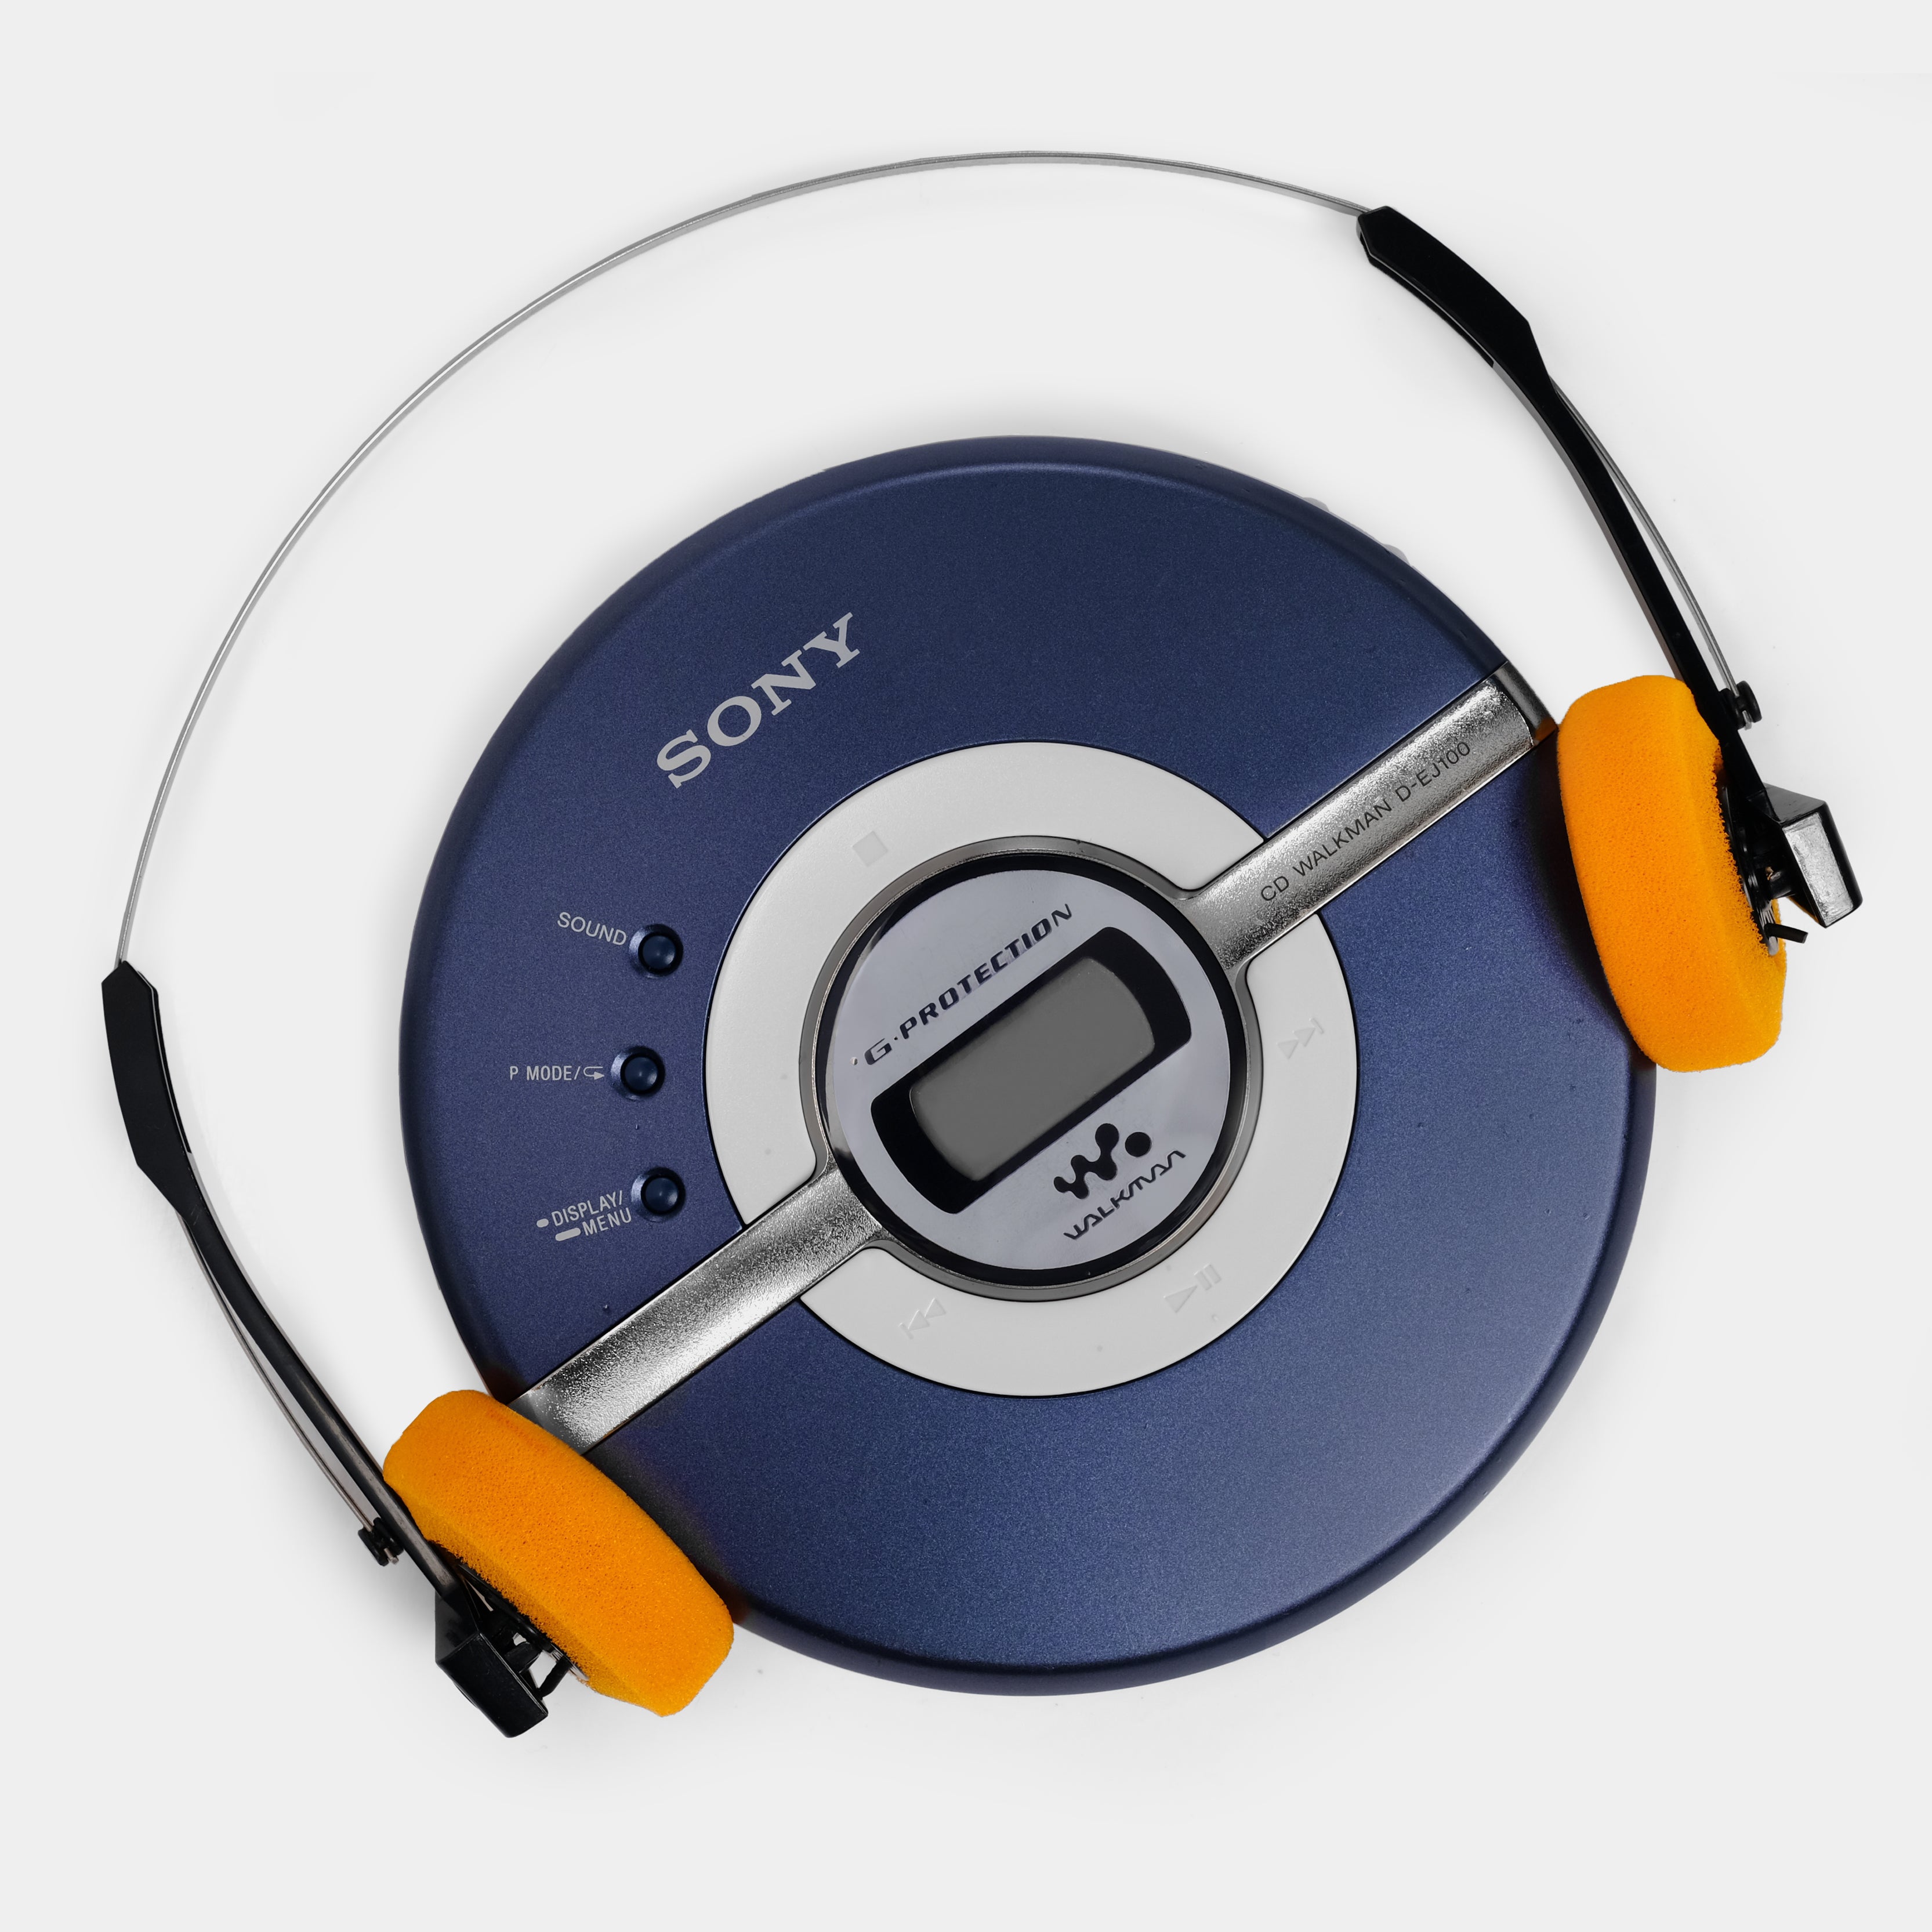 Sony D-EJ100 Portable CD Player